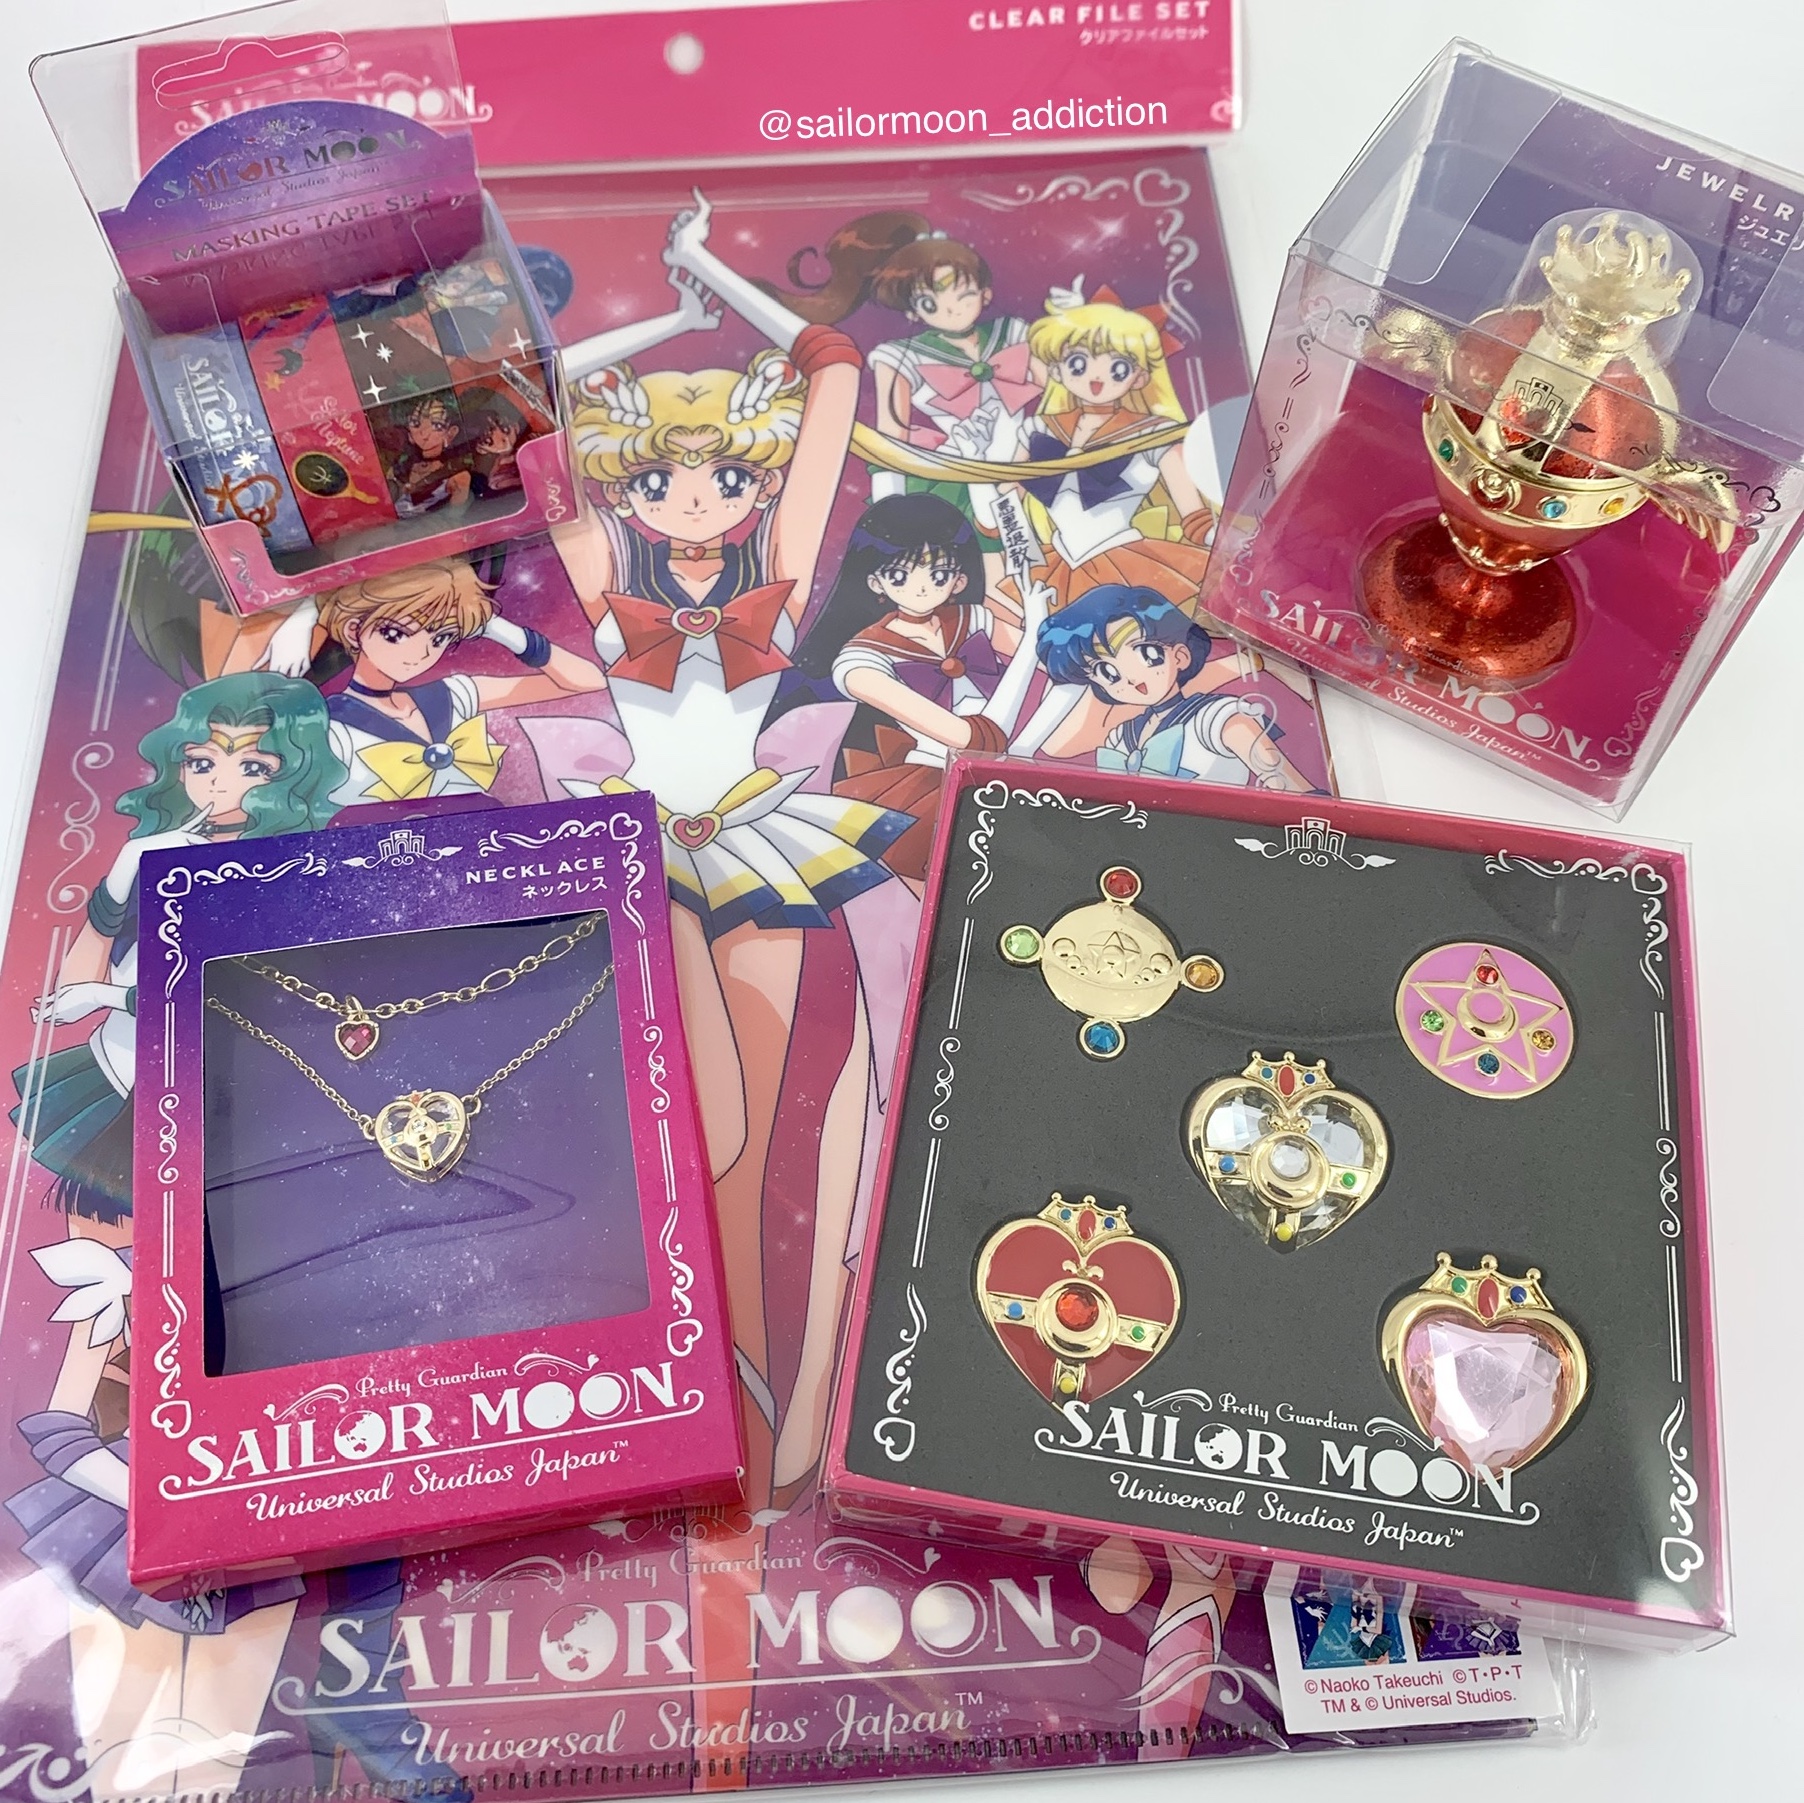 Sailor Moon x Universal Studios Japan 2019 Haul Review - Part V 